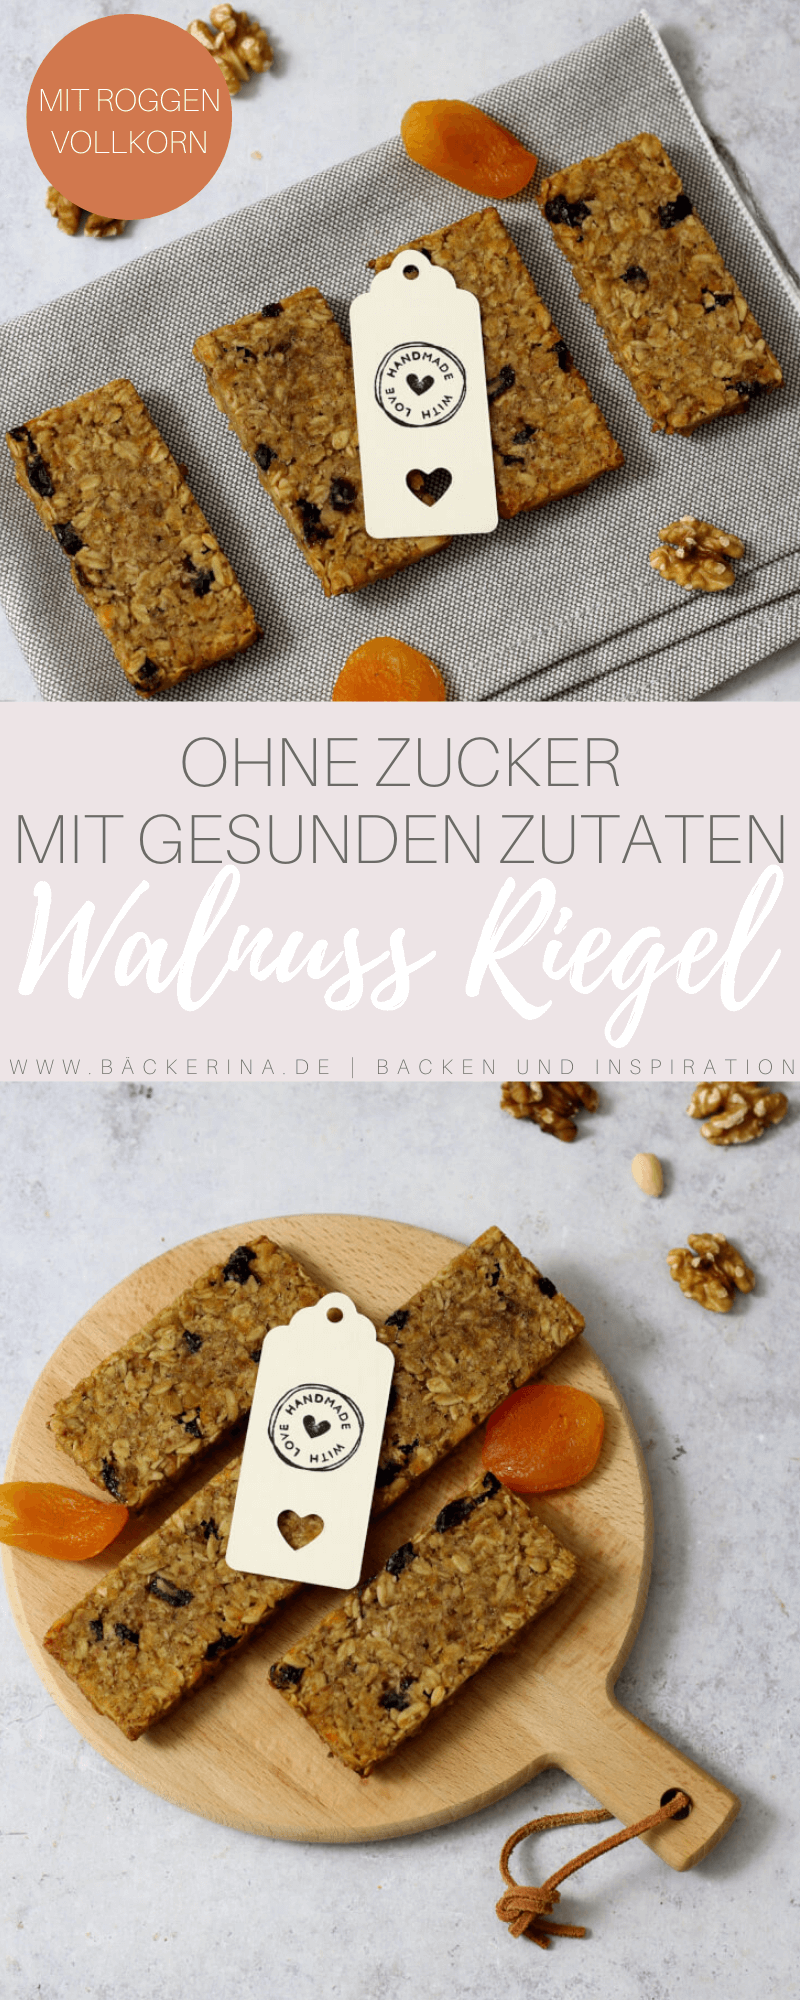 Gesunde Müsliriegel - Mit Walnuss, Roggen &amp; Cranberries - Bäckerina